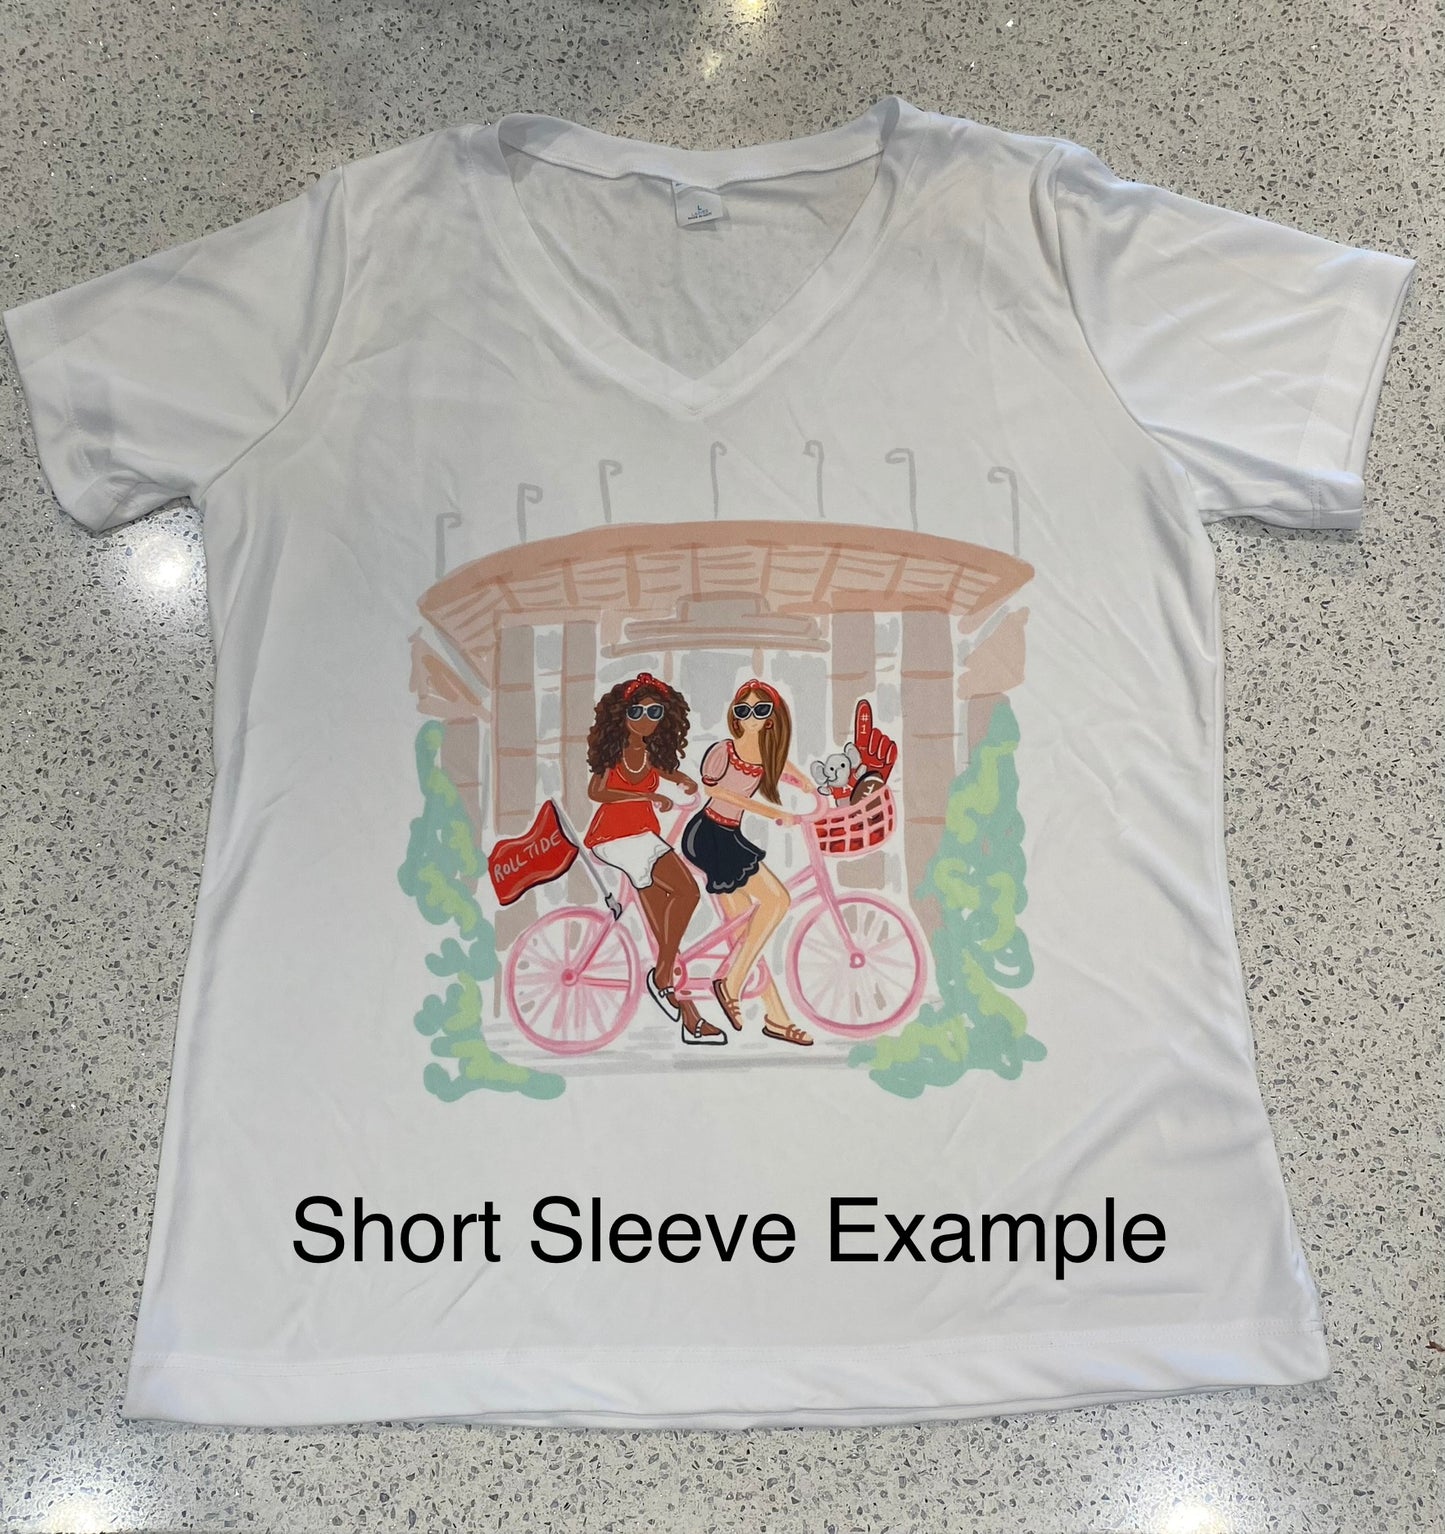 SALE! USC Trojans Inspired illustration Shirts